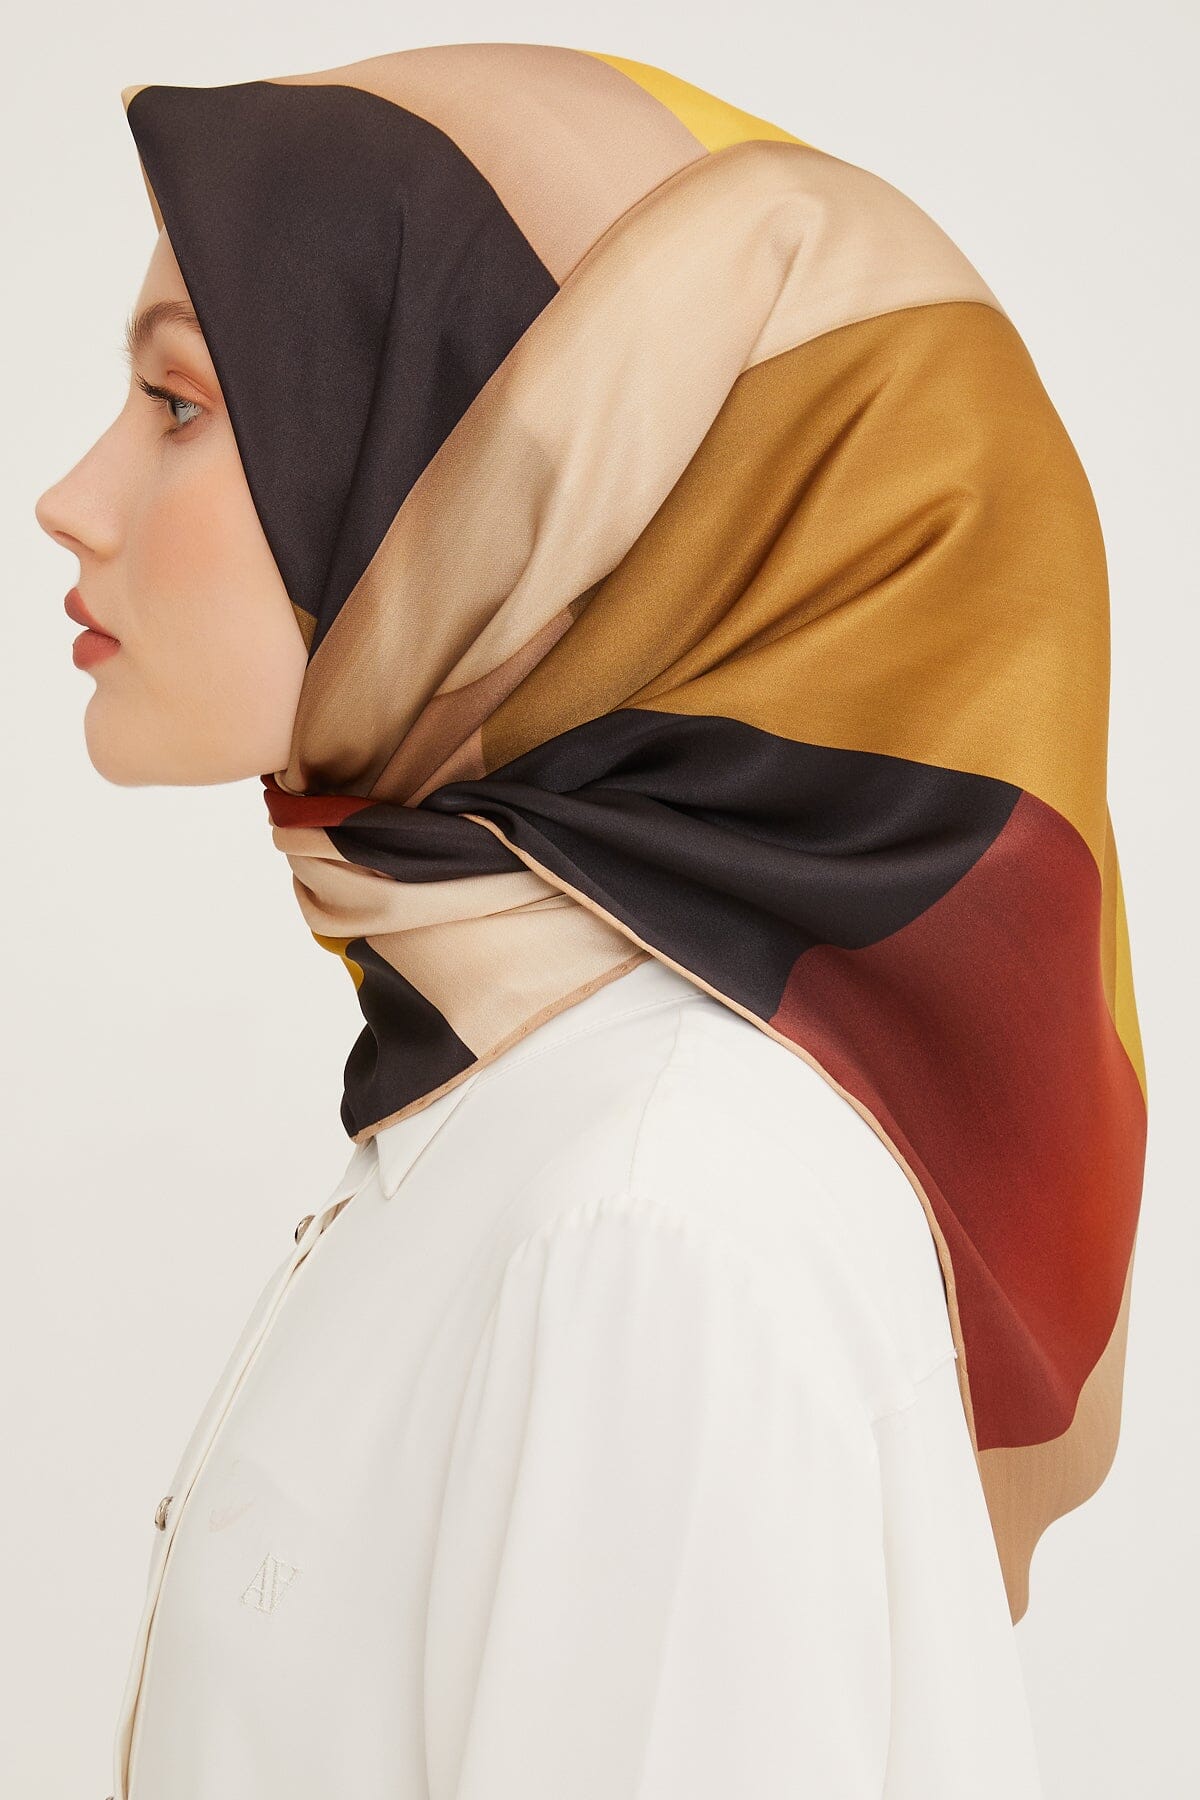 Armine Tahira Silk Twill Scarf #52 Silk Hijabs,Armine Armine 